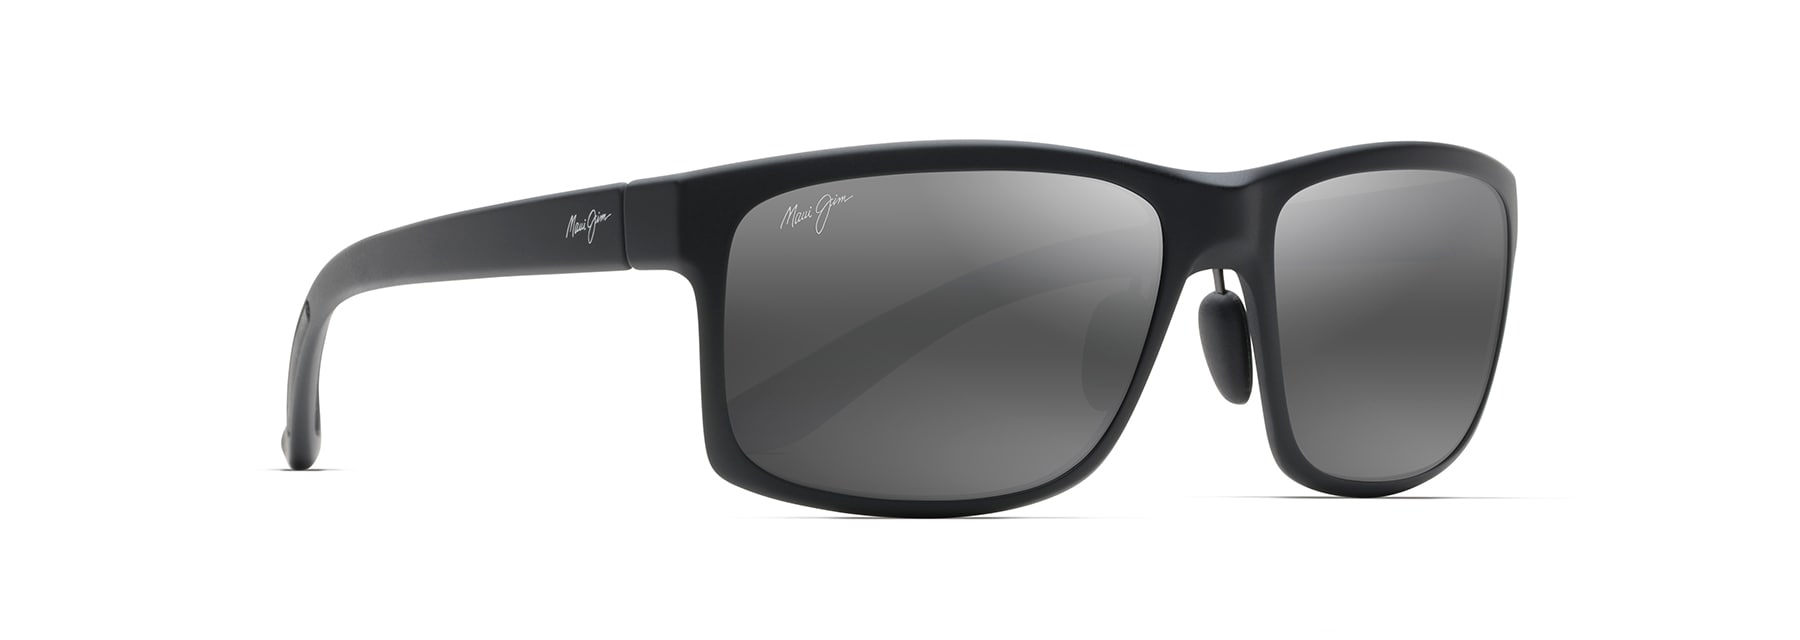 Pokowai Arch Polarized Sunglasses | Maui Jim®